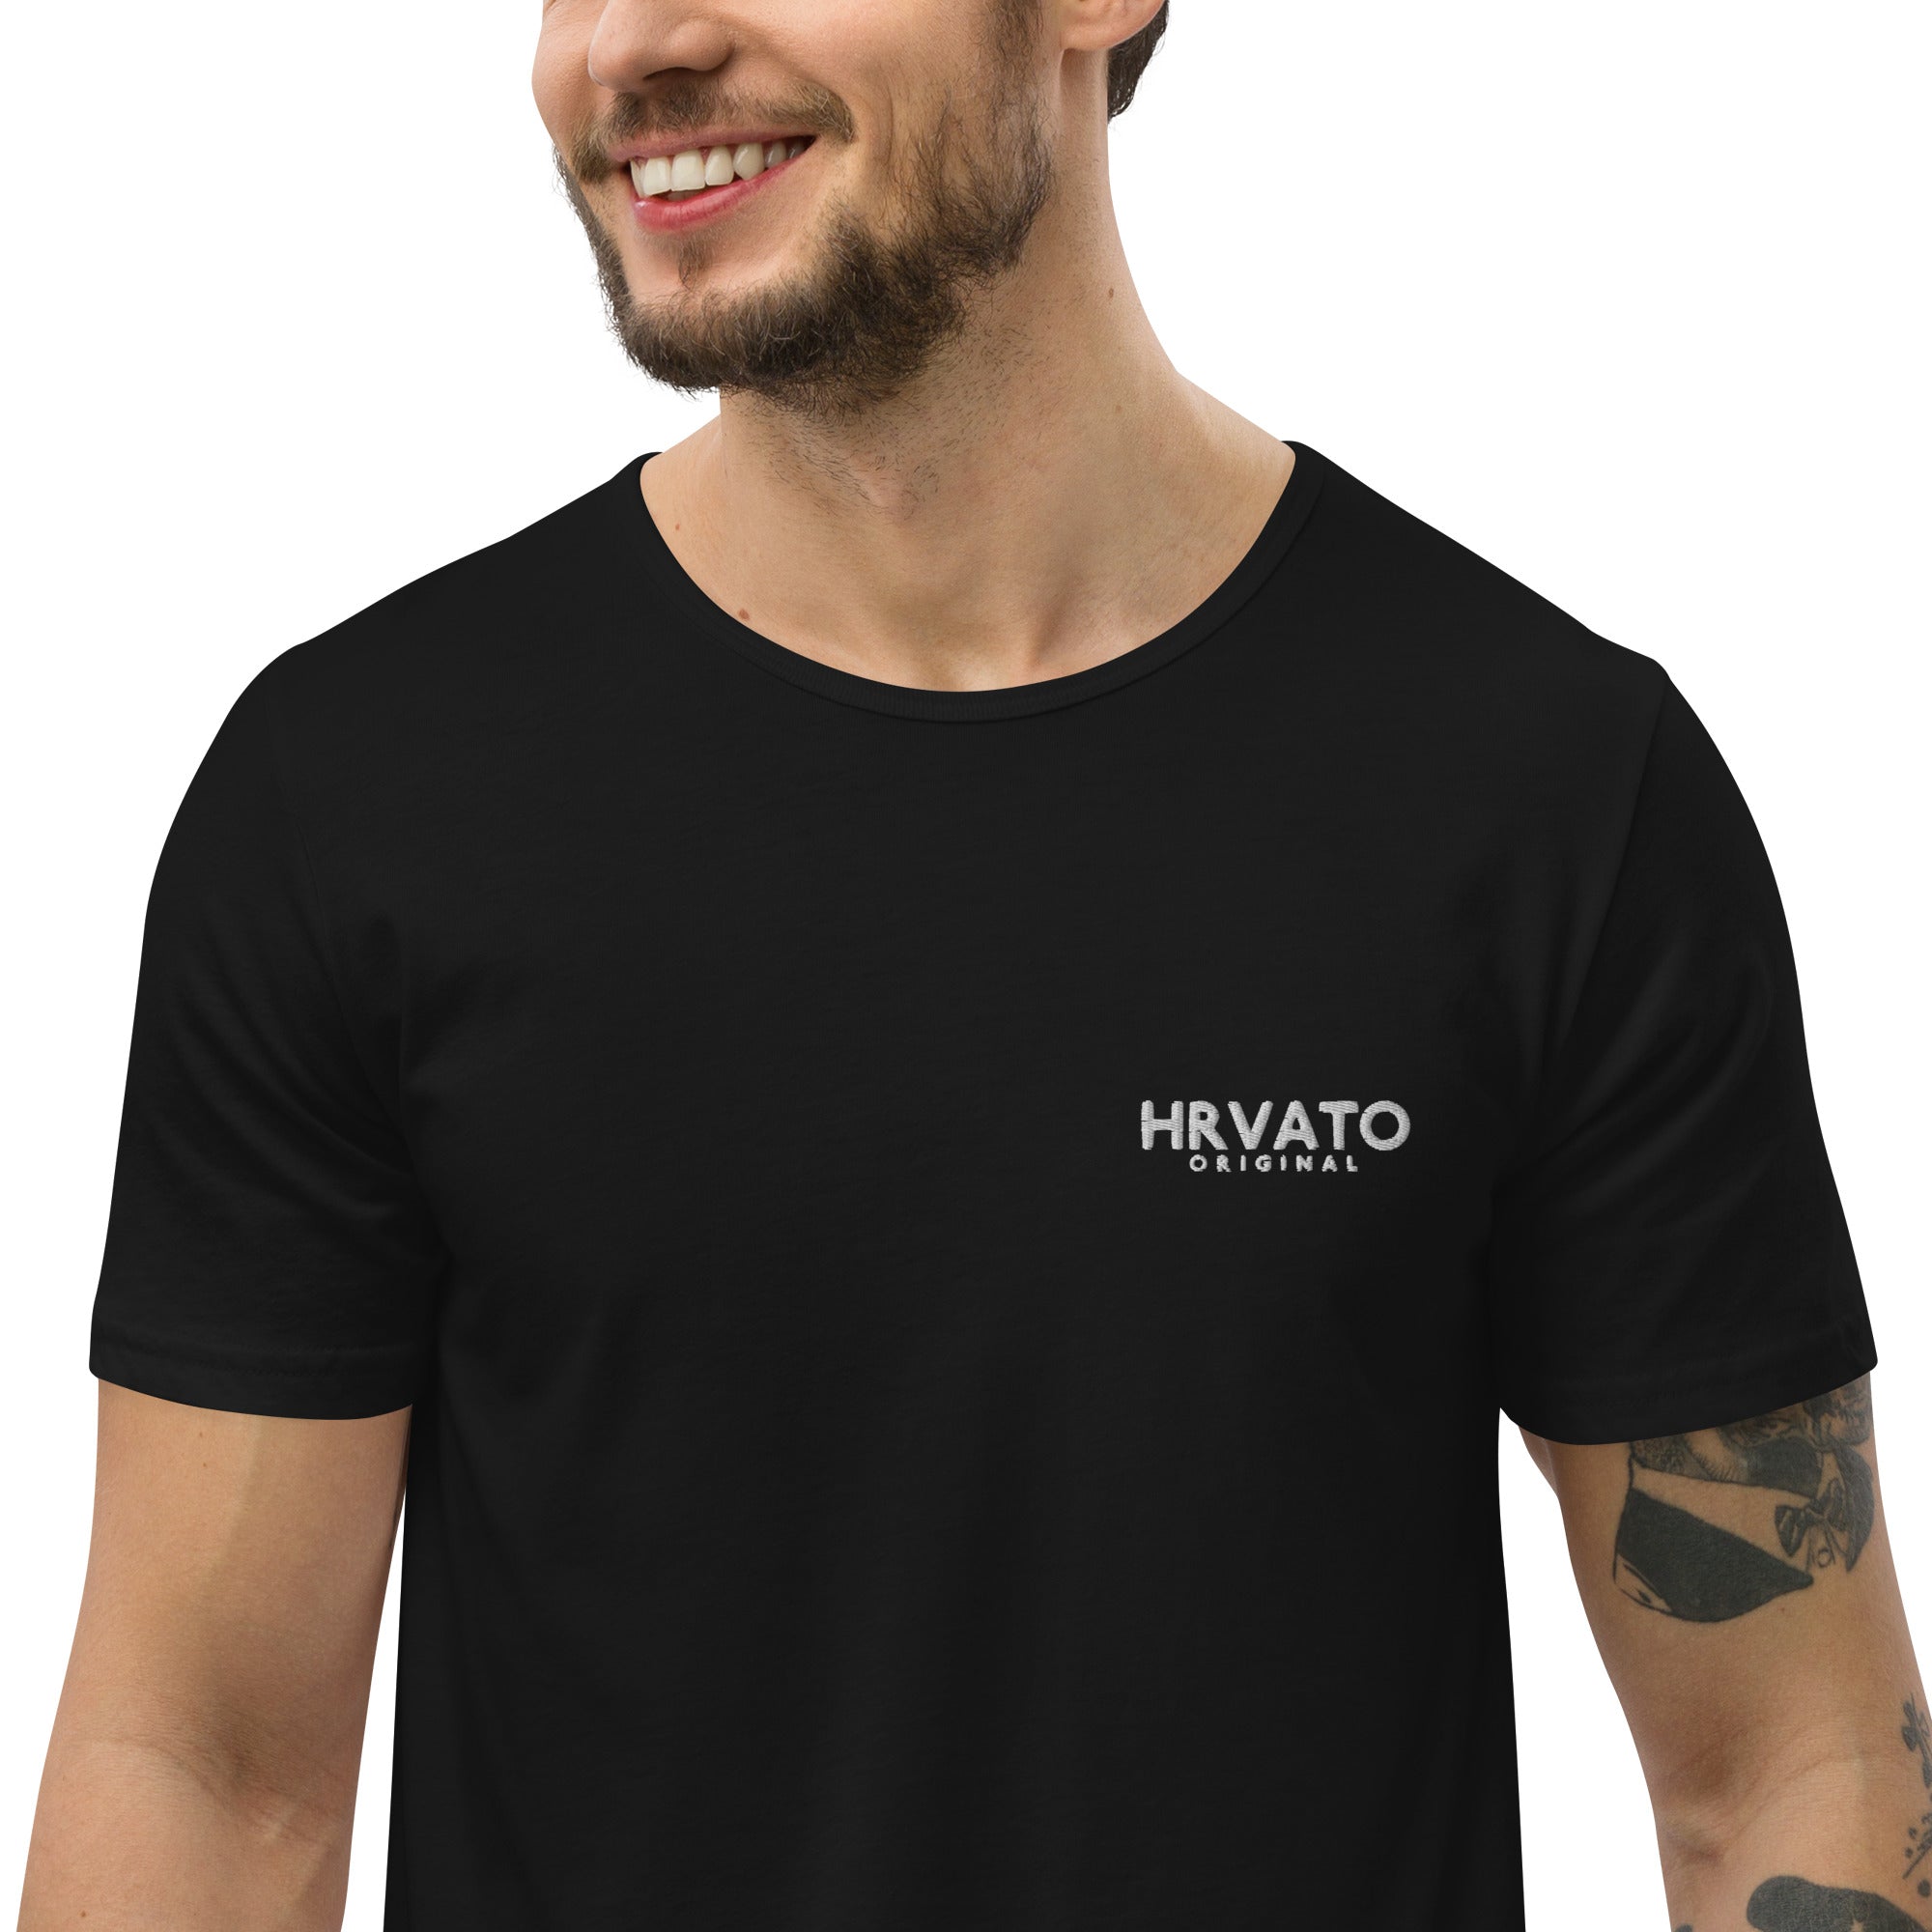 HRVATO Original Logo Men's Curved Hem T-Shirt - White | Embroidered Logo